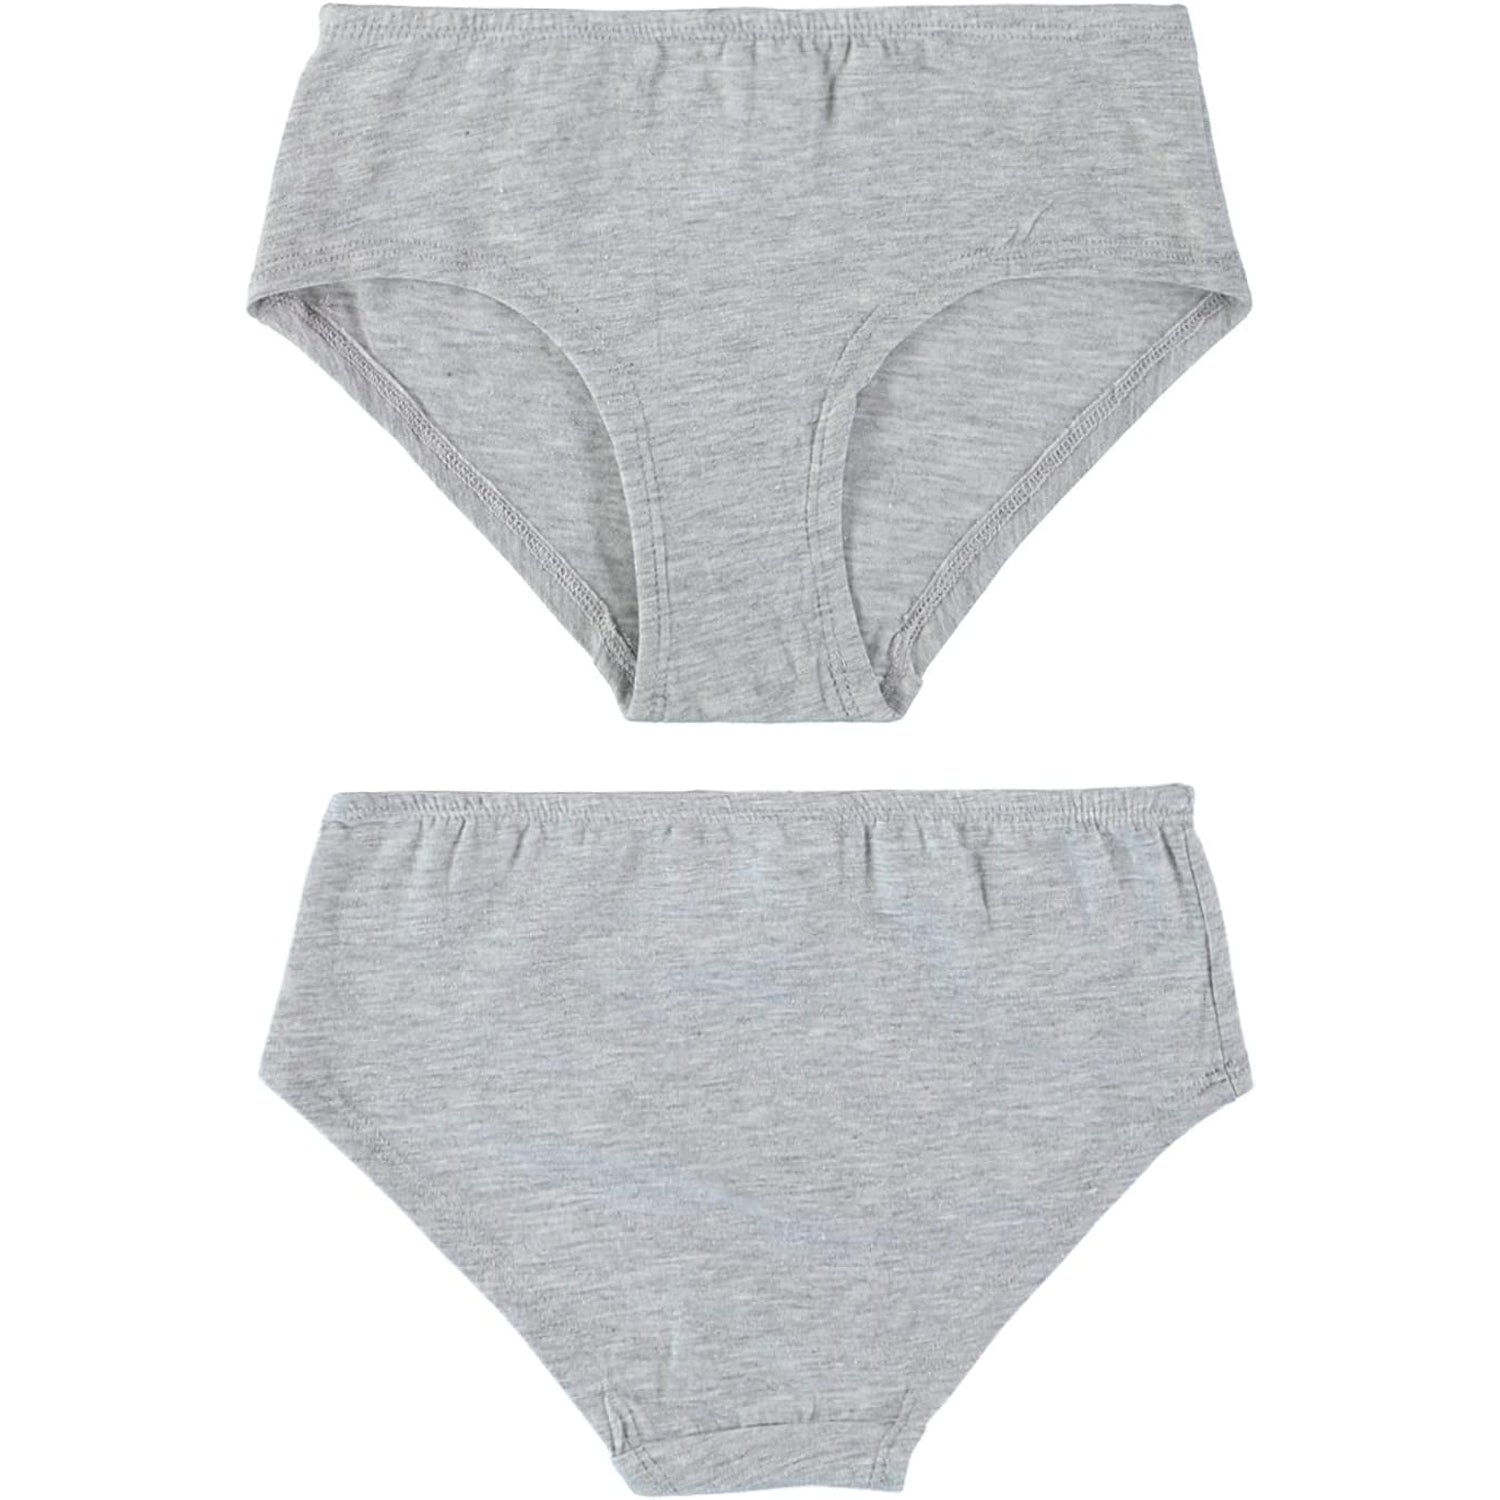 Cyndeelee Girls 7-14 Cotton 10-Pack Matching Bra & Panty Set – S&D